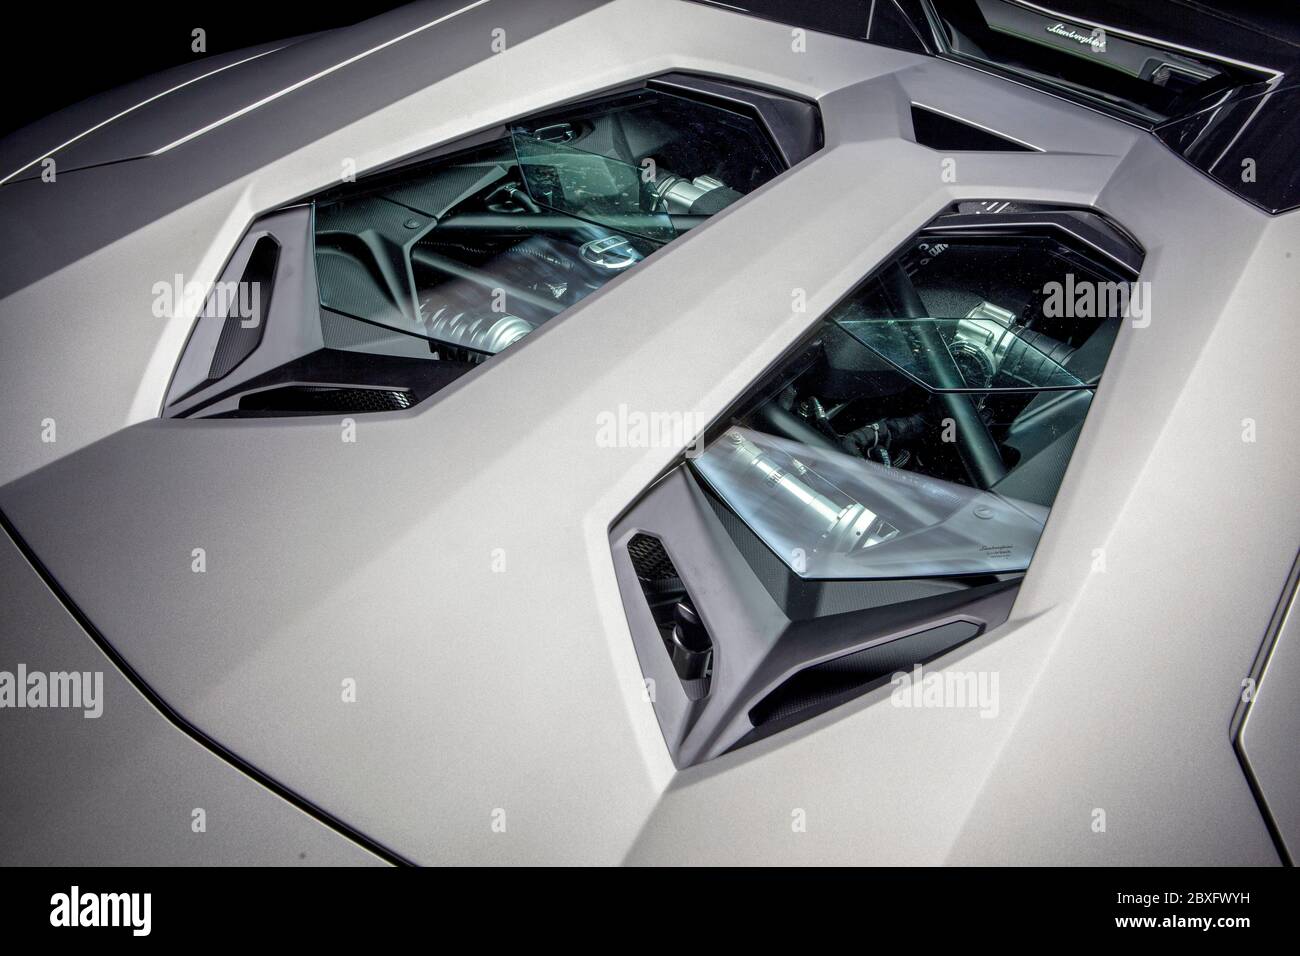 Lamborghini Aventador Supercar Details Stock Photo